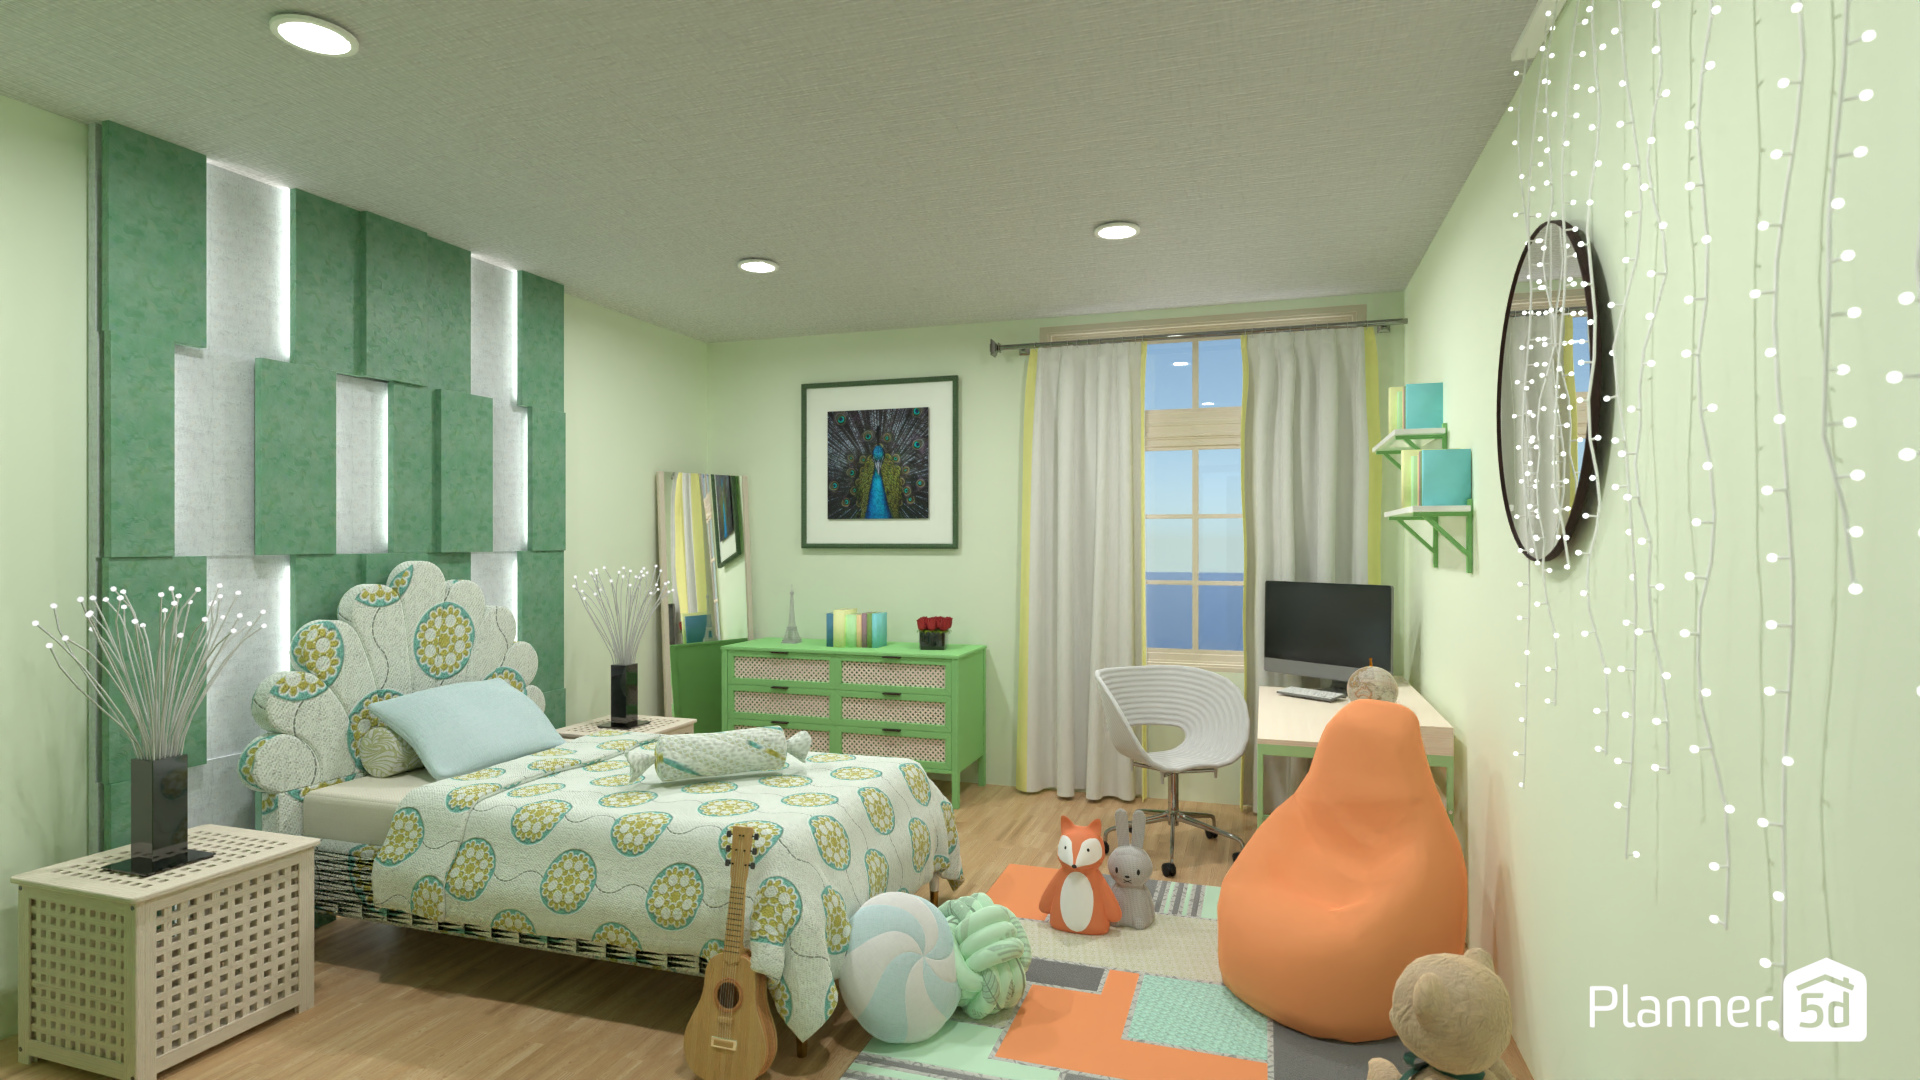 Dream bedroom : Design battle contest 17155303 by Gabes image